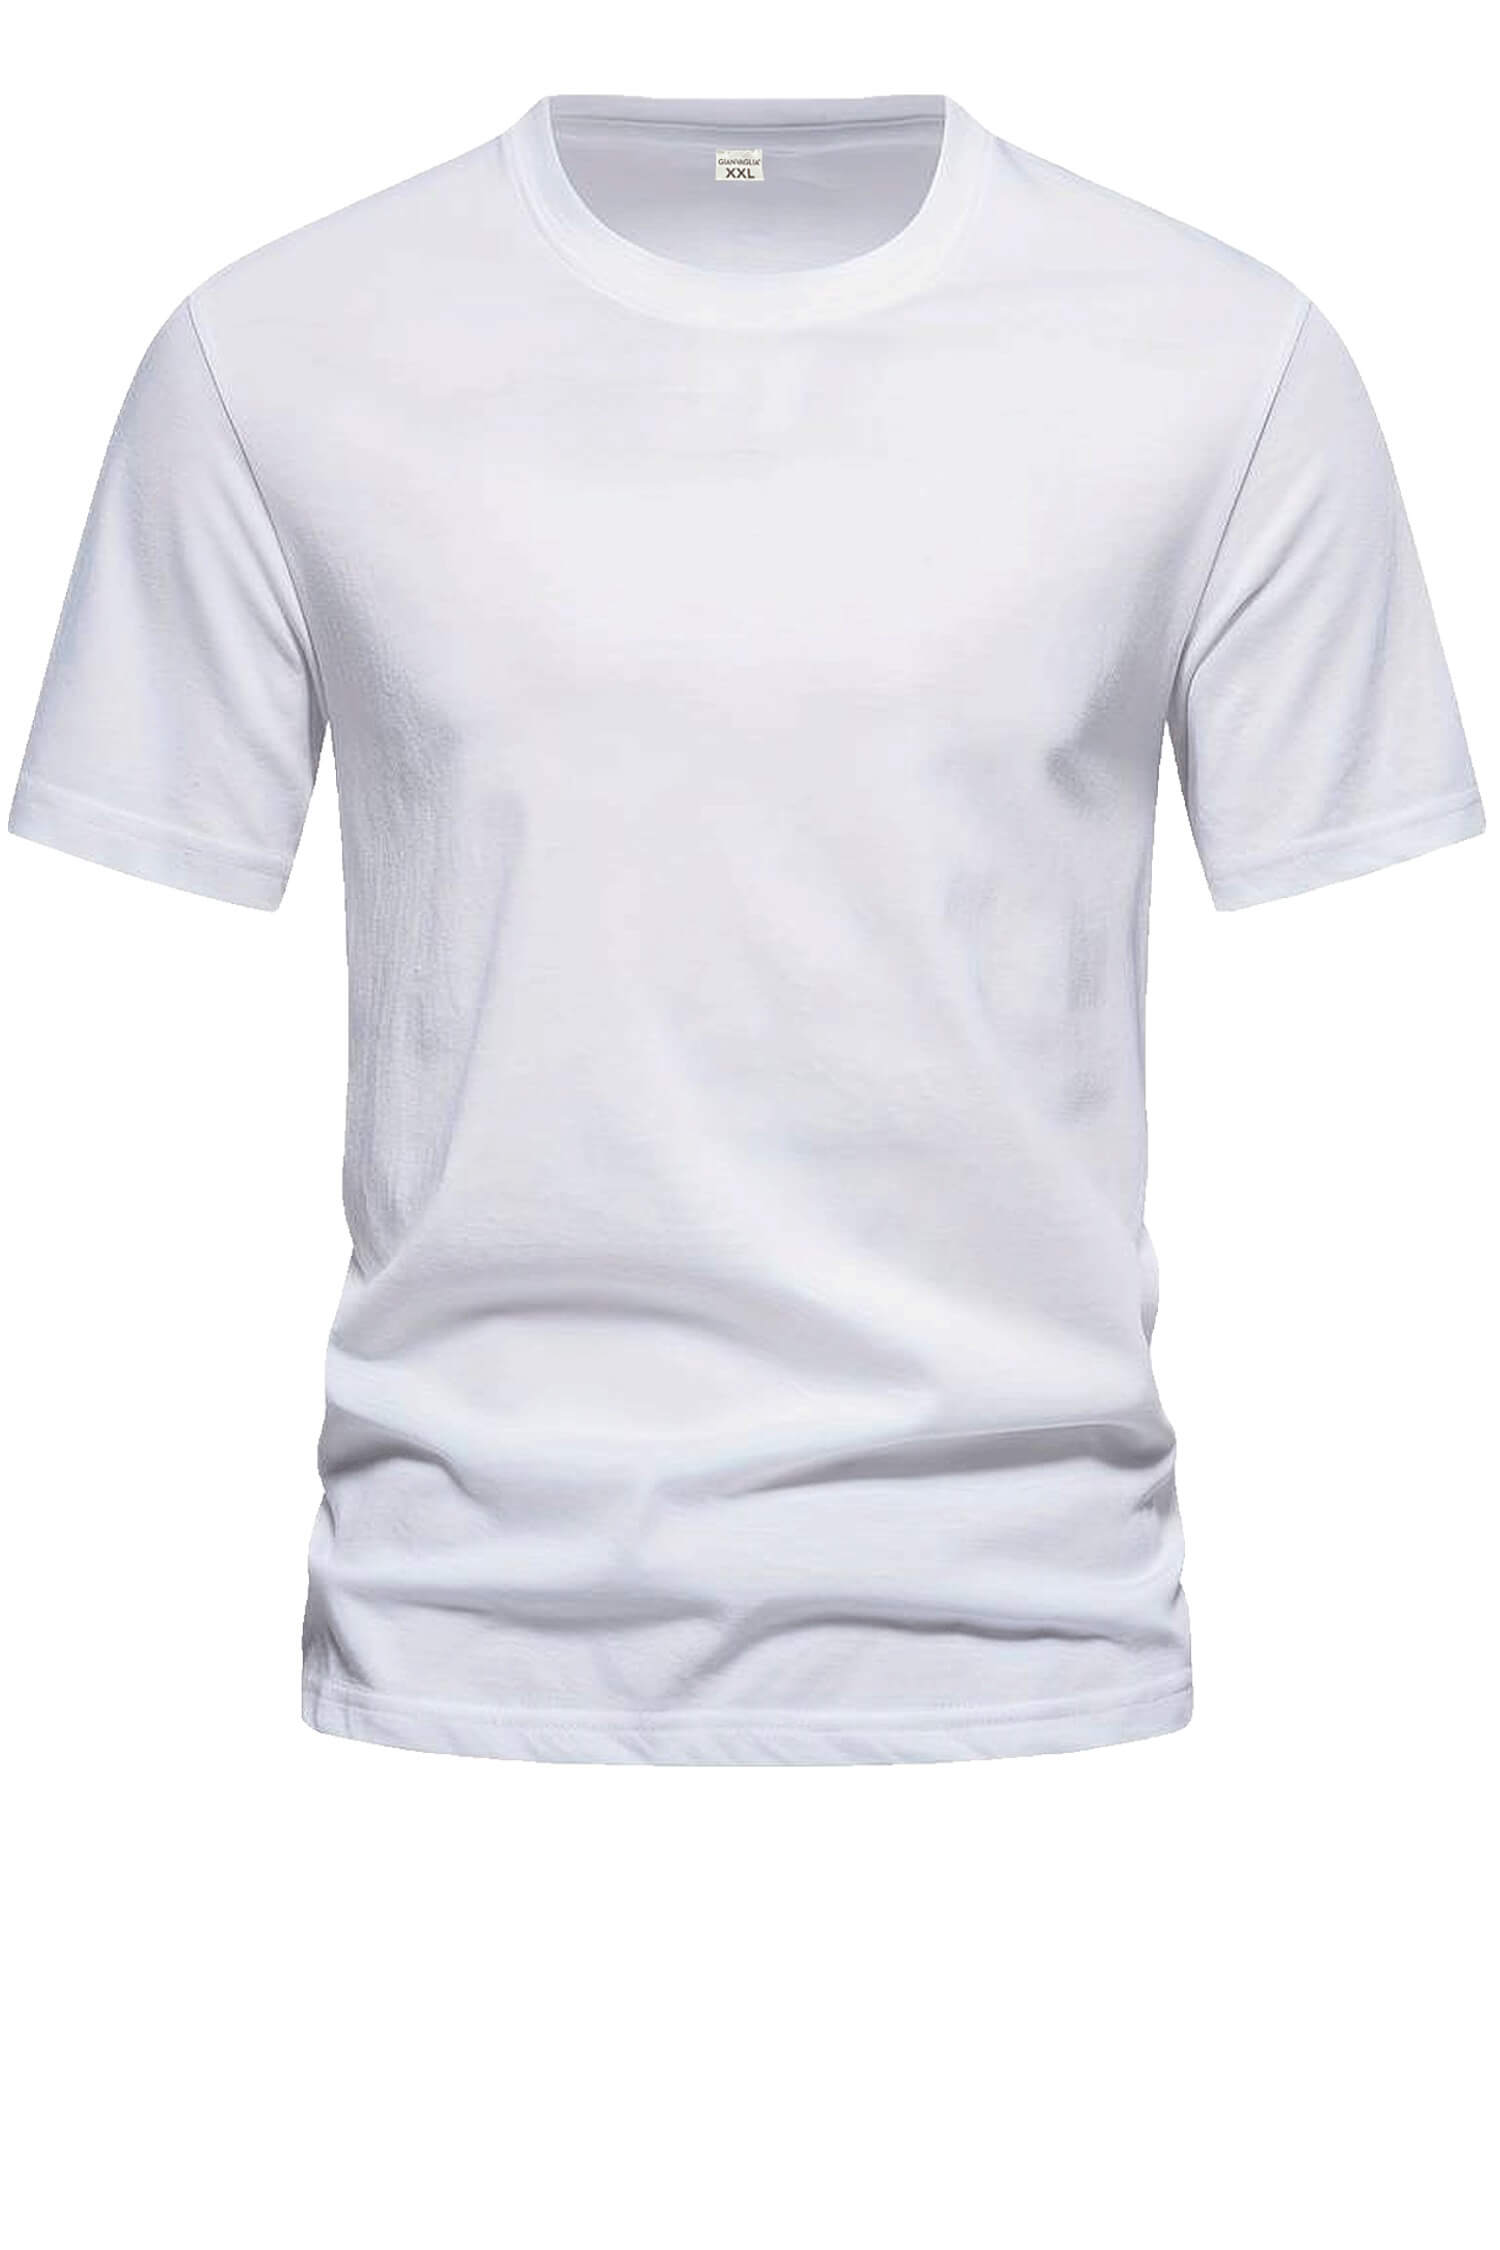 Bořek pánské klasické tričko TS-1006 bílá XXL